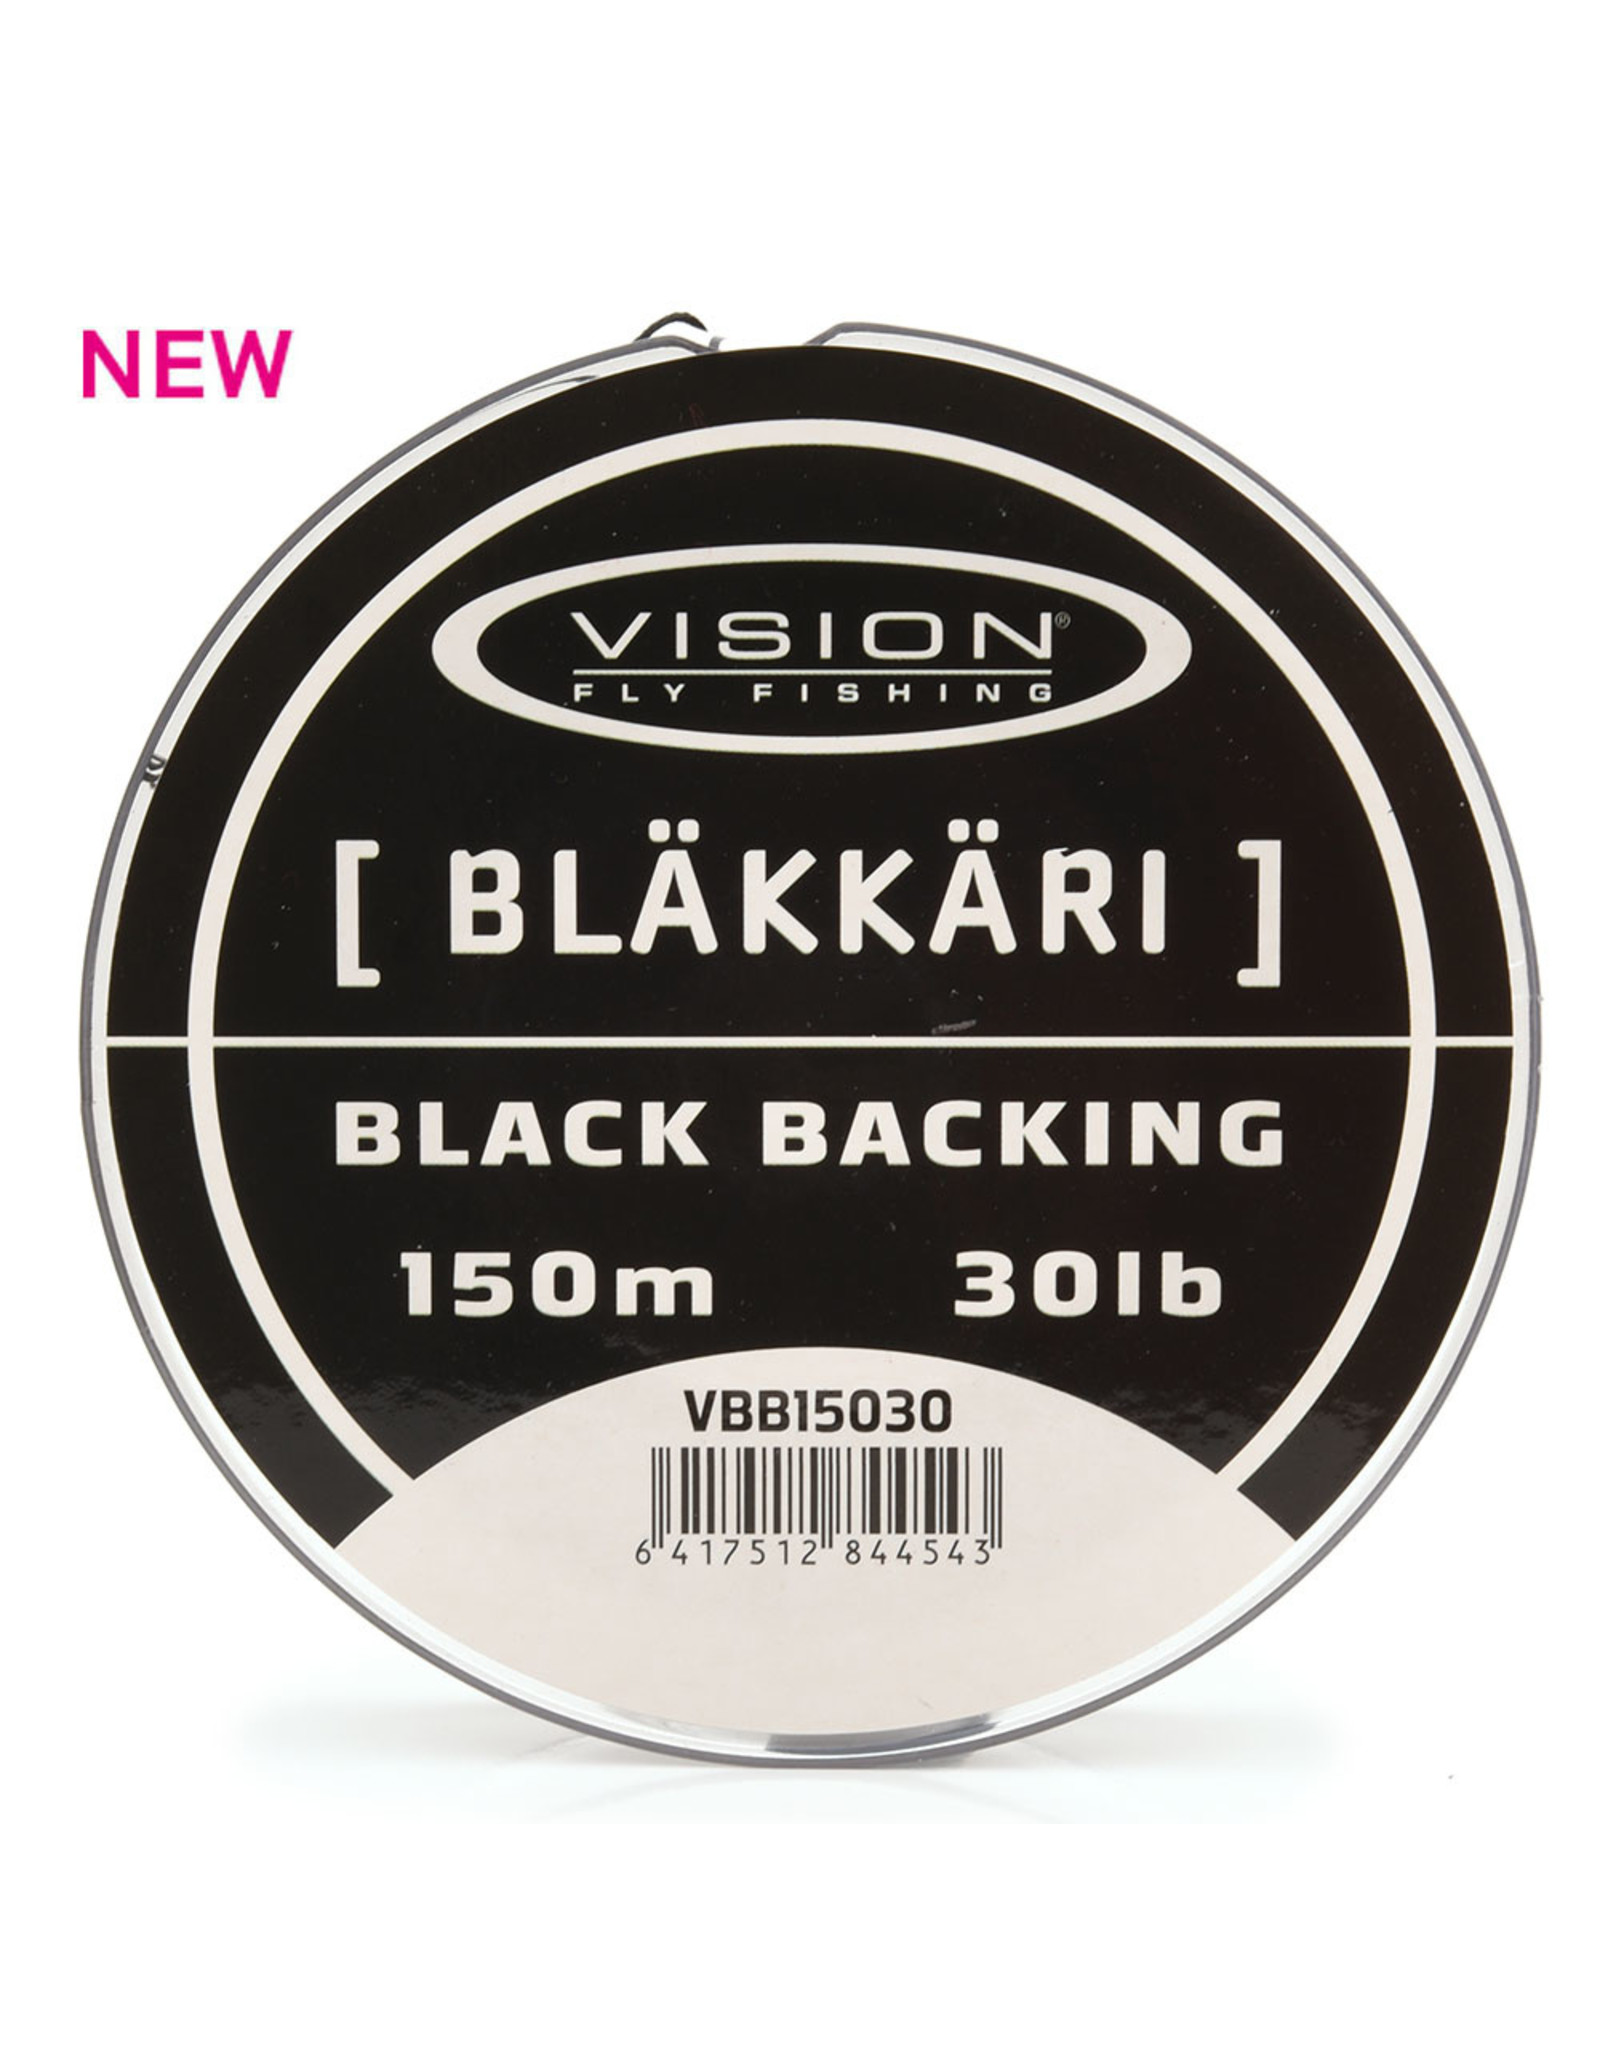 VISION FLY FISHING BLAKKARI BLACK BACKING